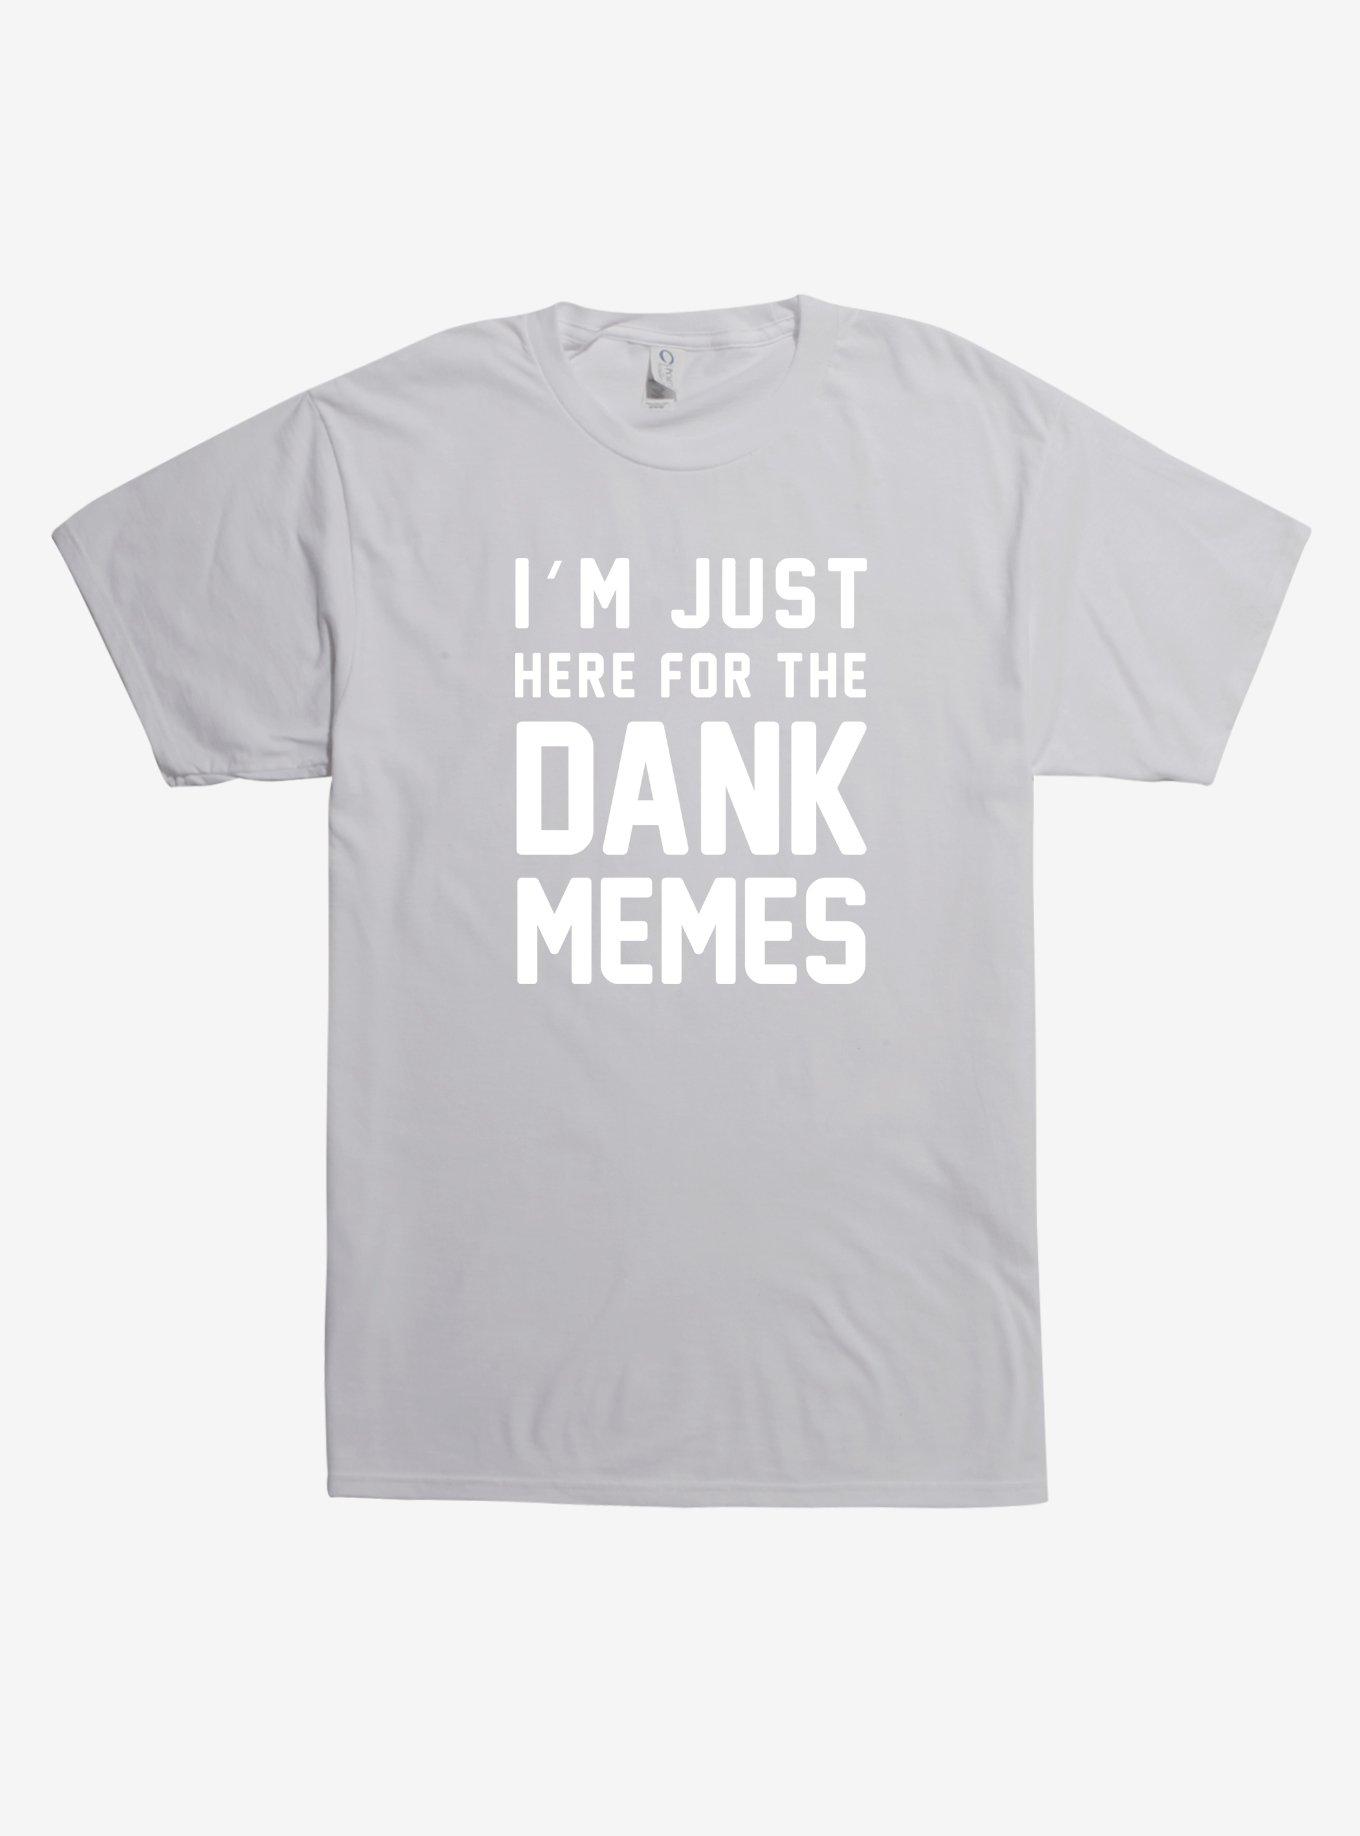 Funny Meme T-shirt, Graphic Tees, Dank Meme T-shirt, Funny Shirt